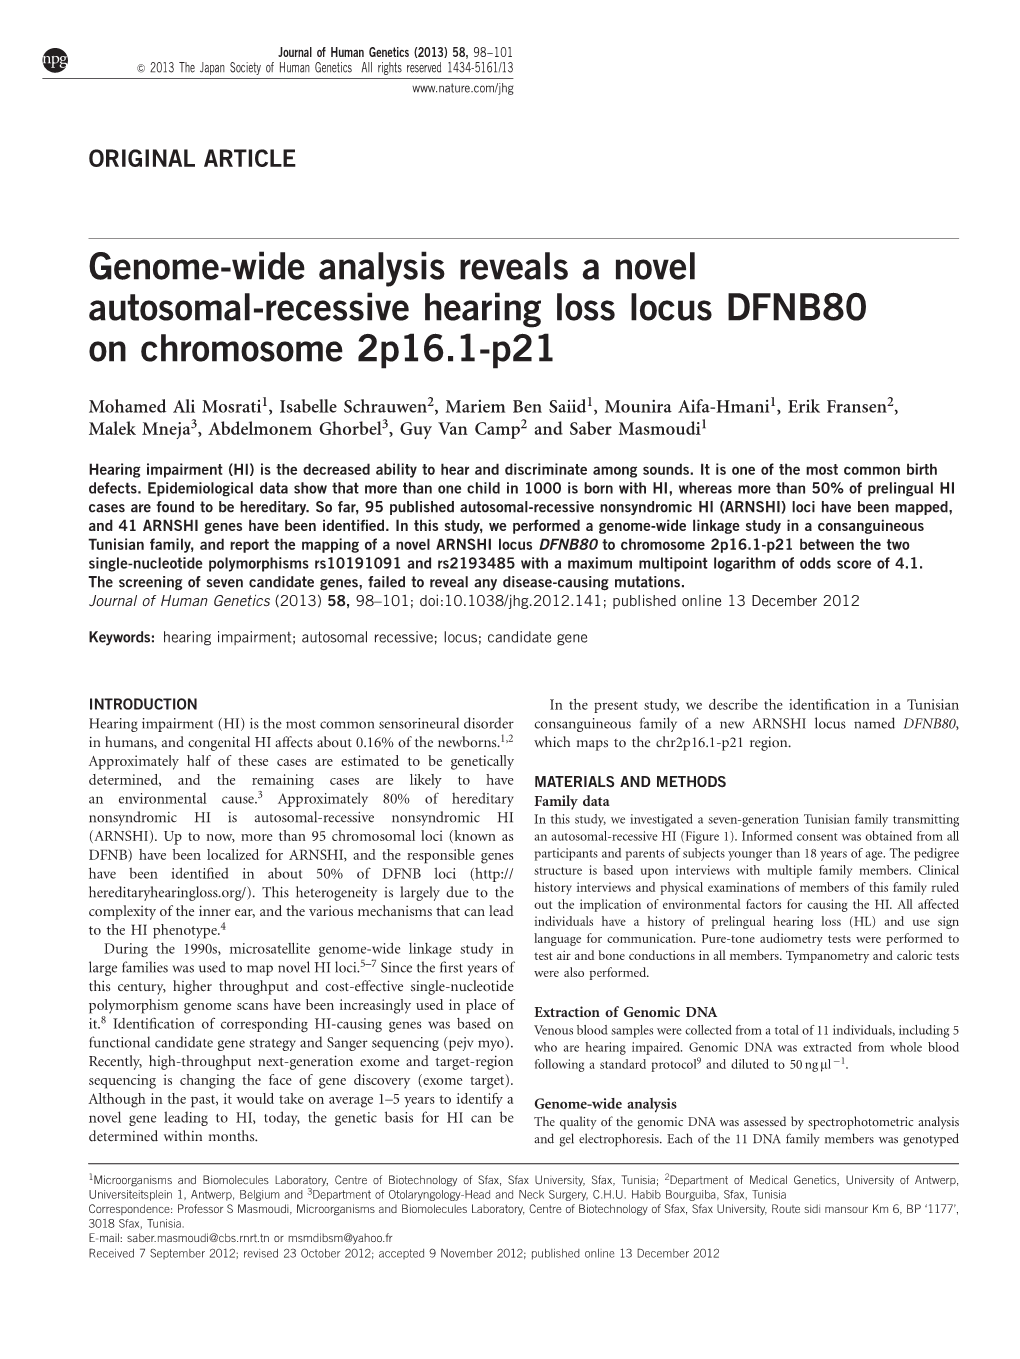 Genome-Wide Analysis Reveals a Novel Autosomal-Recessive Hearing Loss Locus DFNB80 on Chromosome 2P16.1-P21